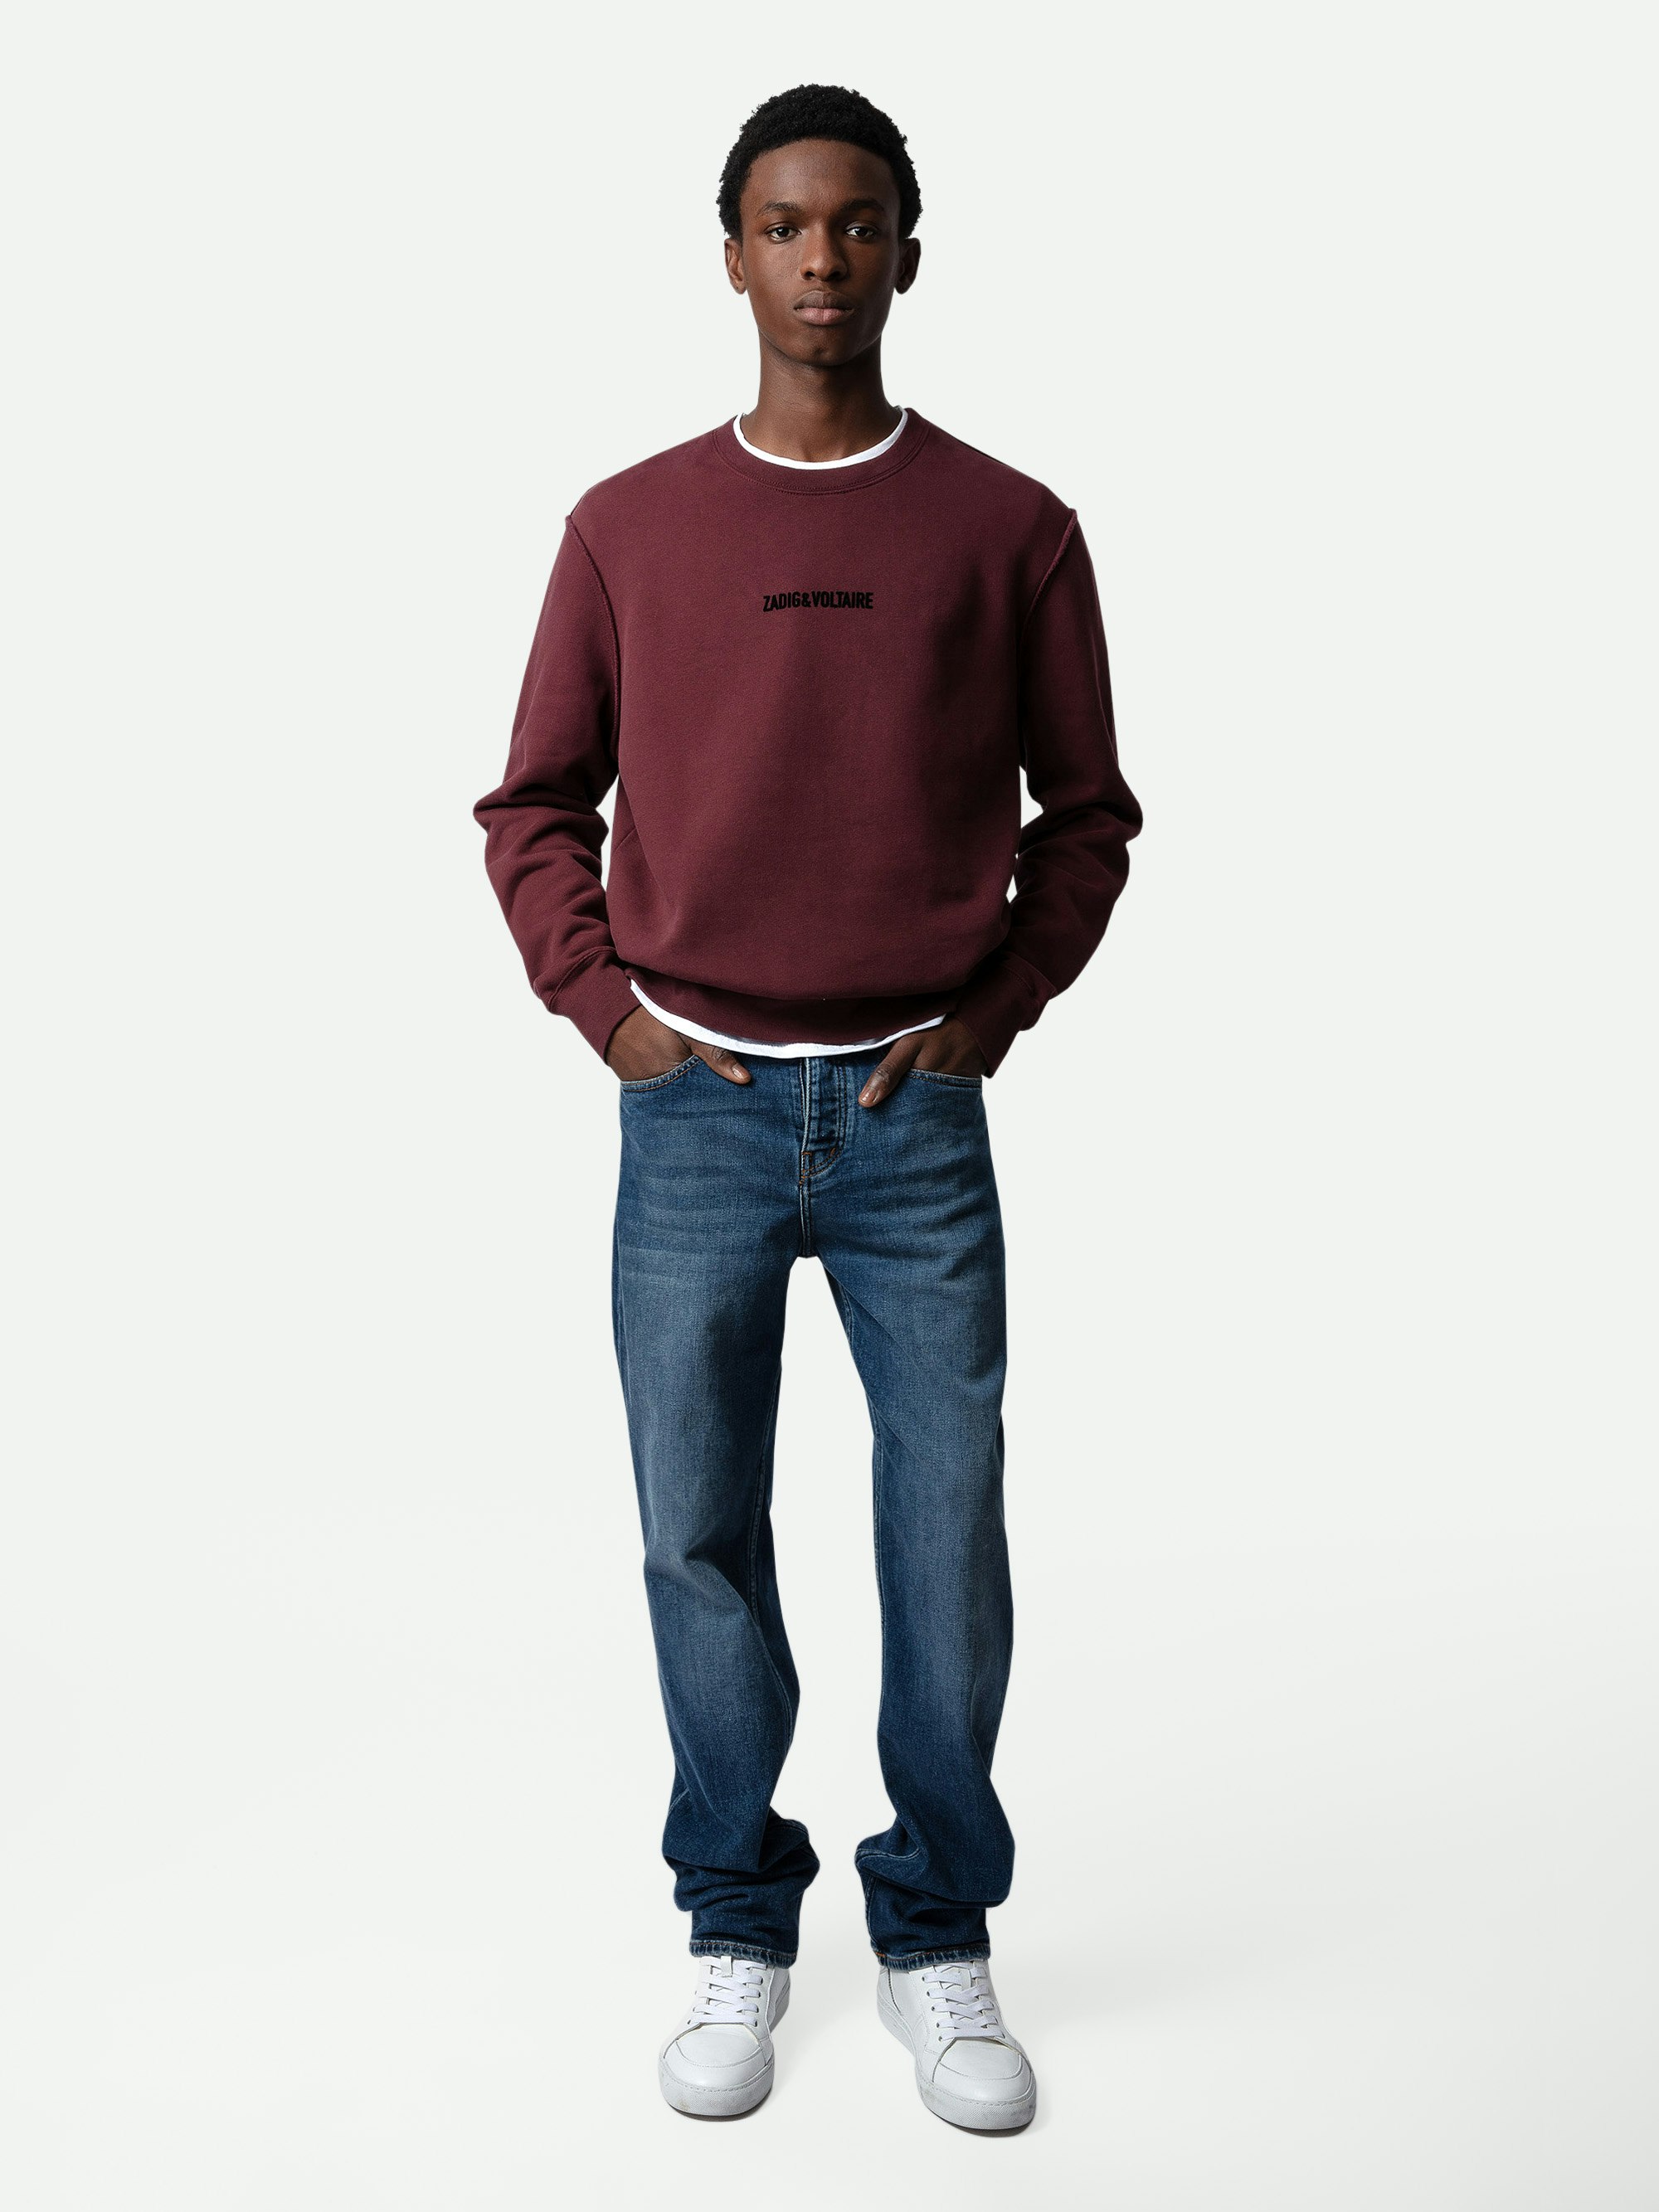 Sweatshirt Simba - Bordeauxrotes Langarm-Sweatshirt mit Markensignatur und Dobermann-Print.